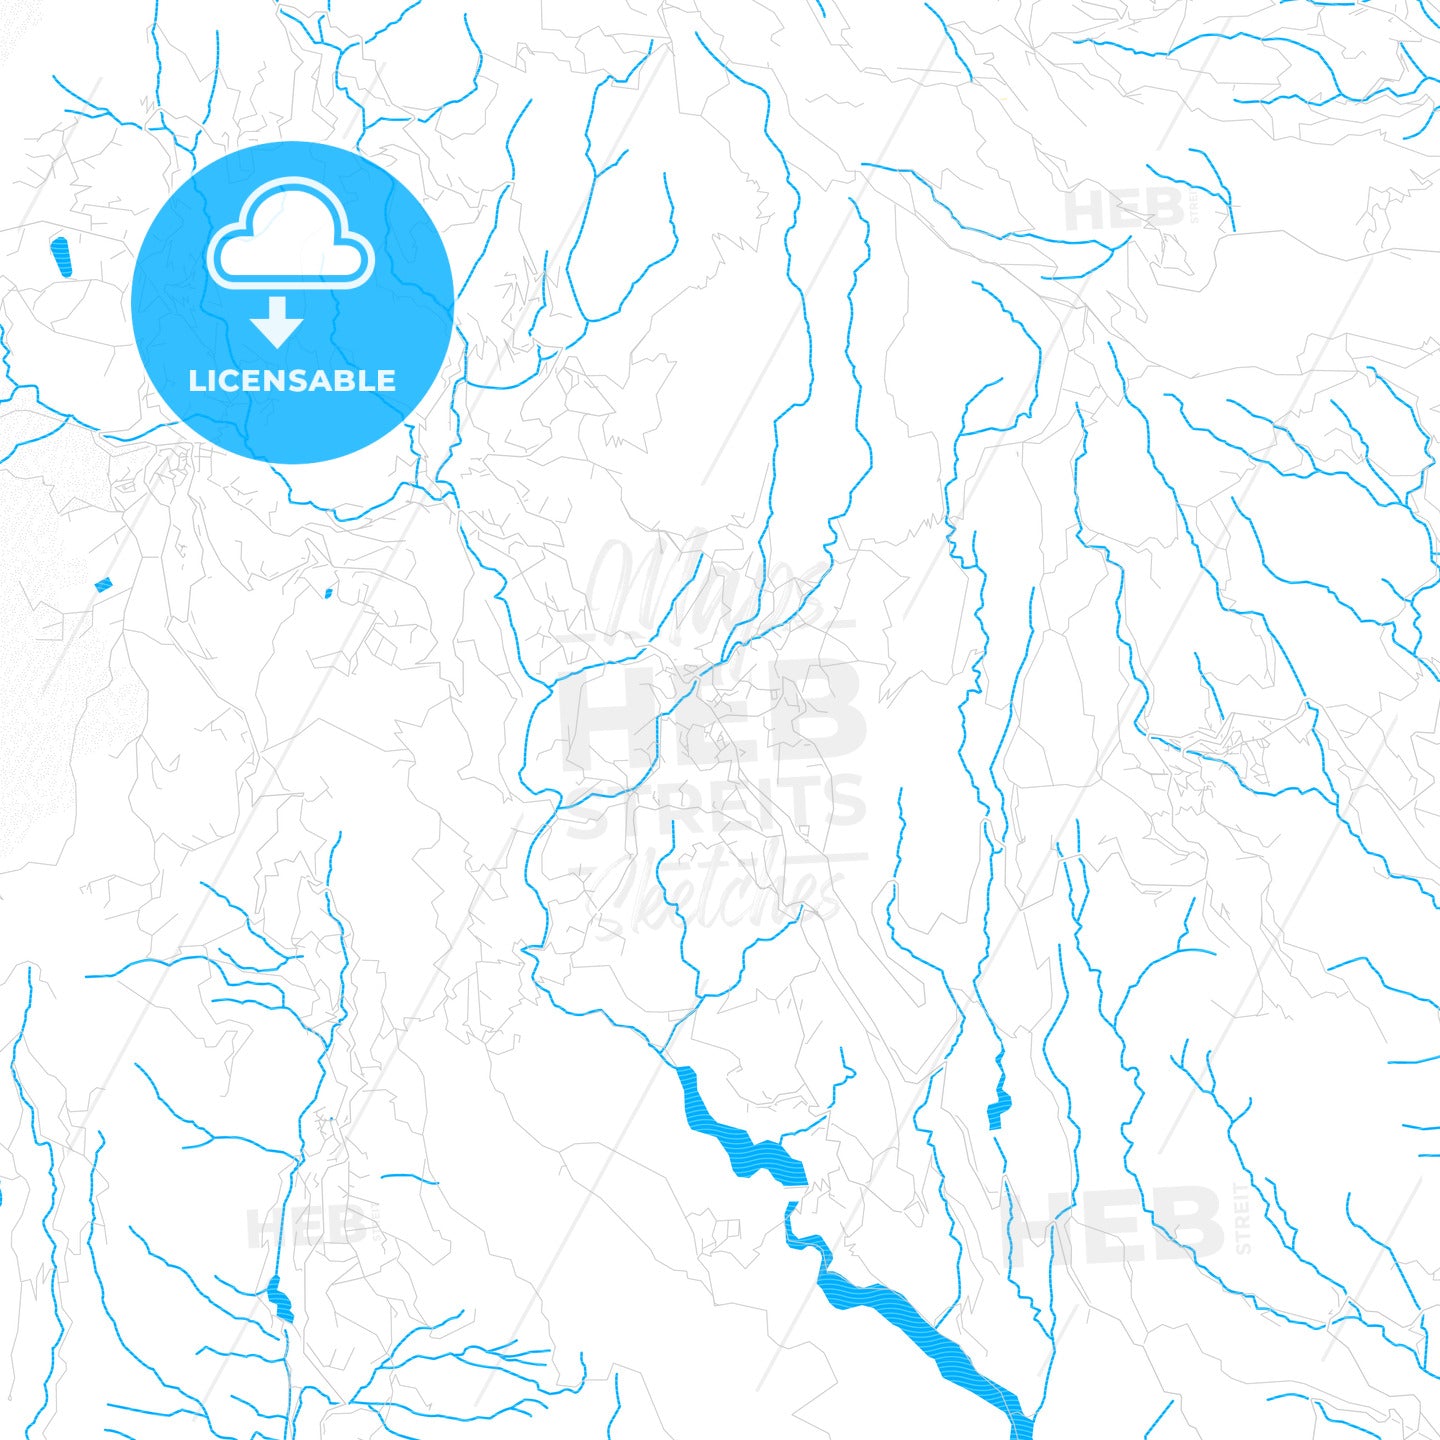 Santa Lucía, Spain PDF vector map with water in focus